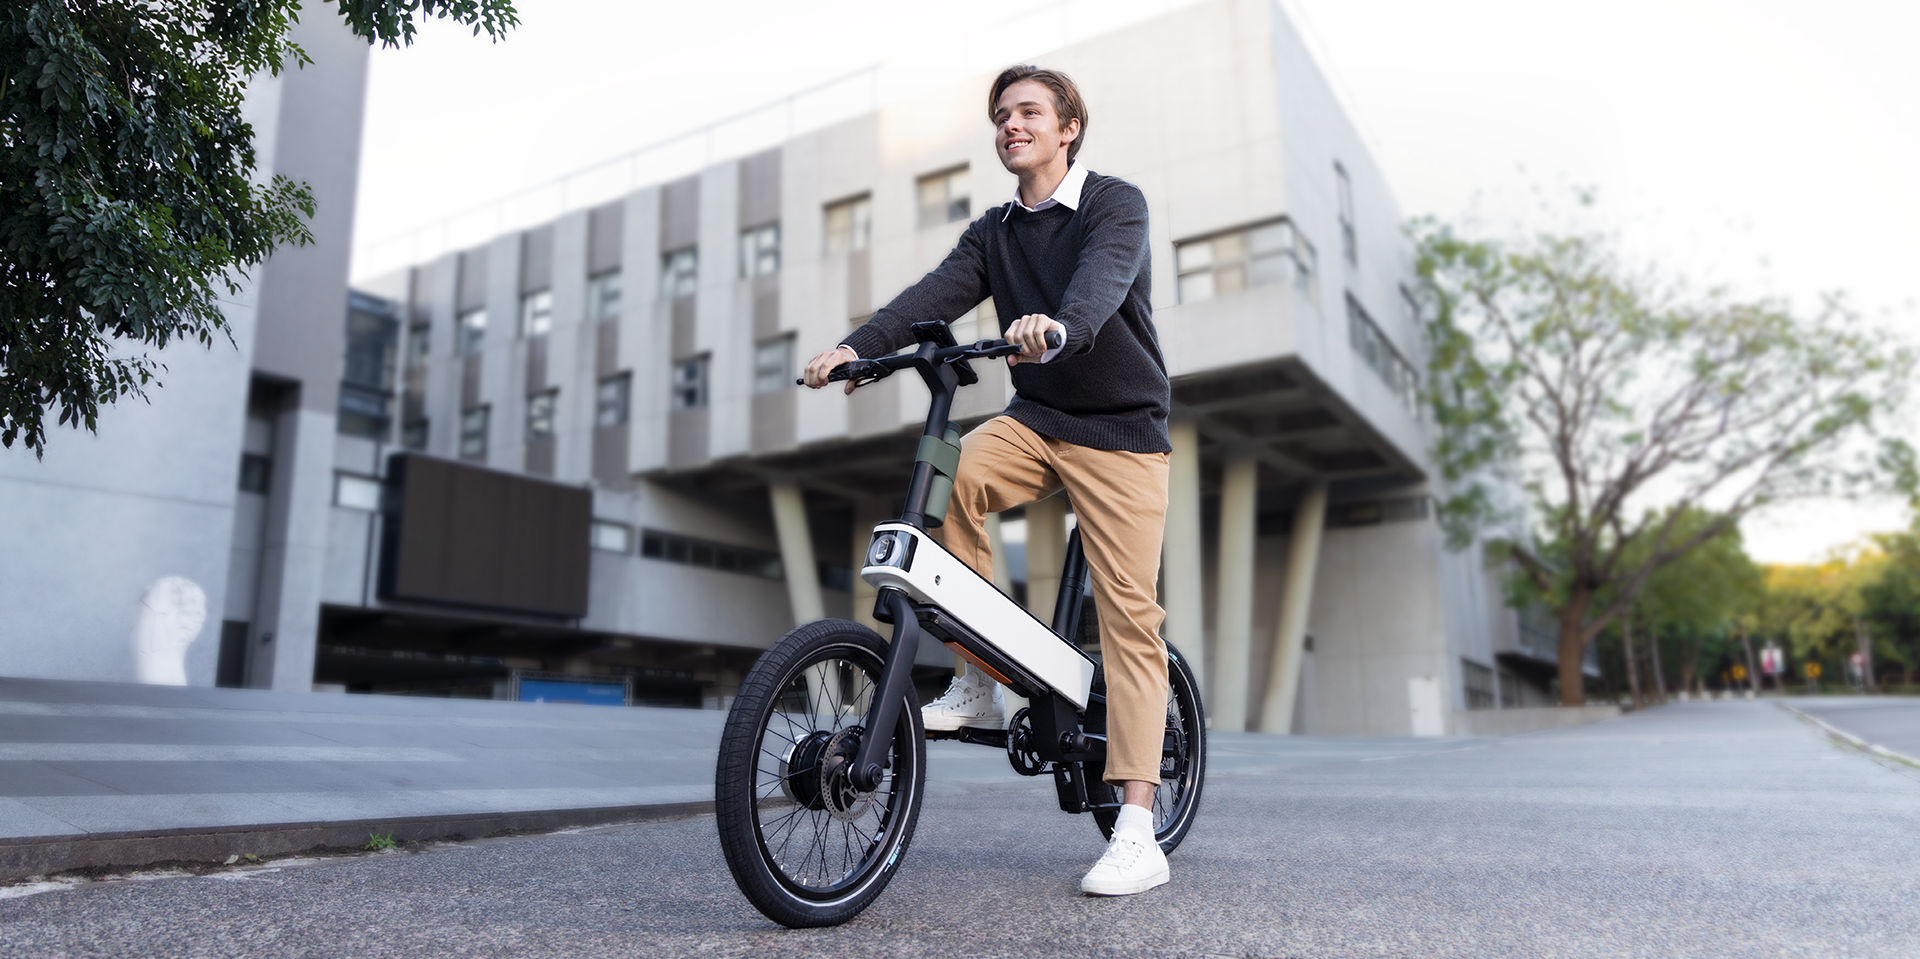 Acer ebii: una bici elettrica con intelligenza artificiale per una guida sicura